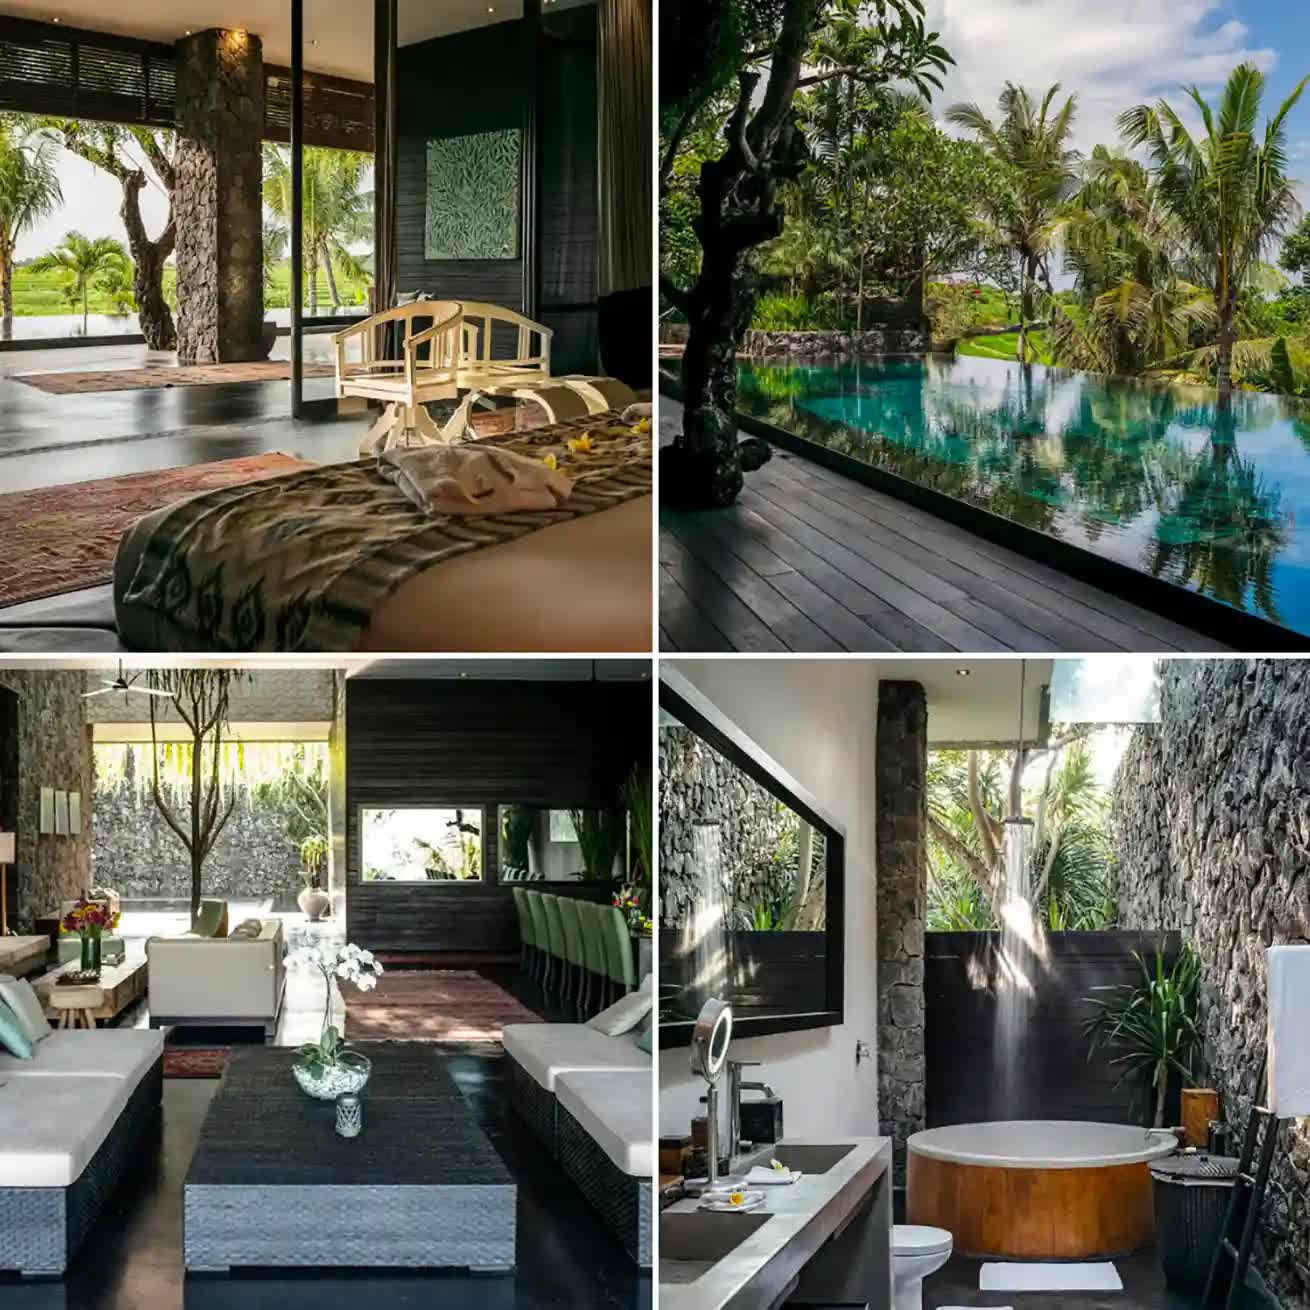 Bedroom, bathroom, living room and pool in one of the Elite Havens villas